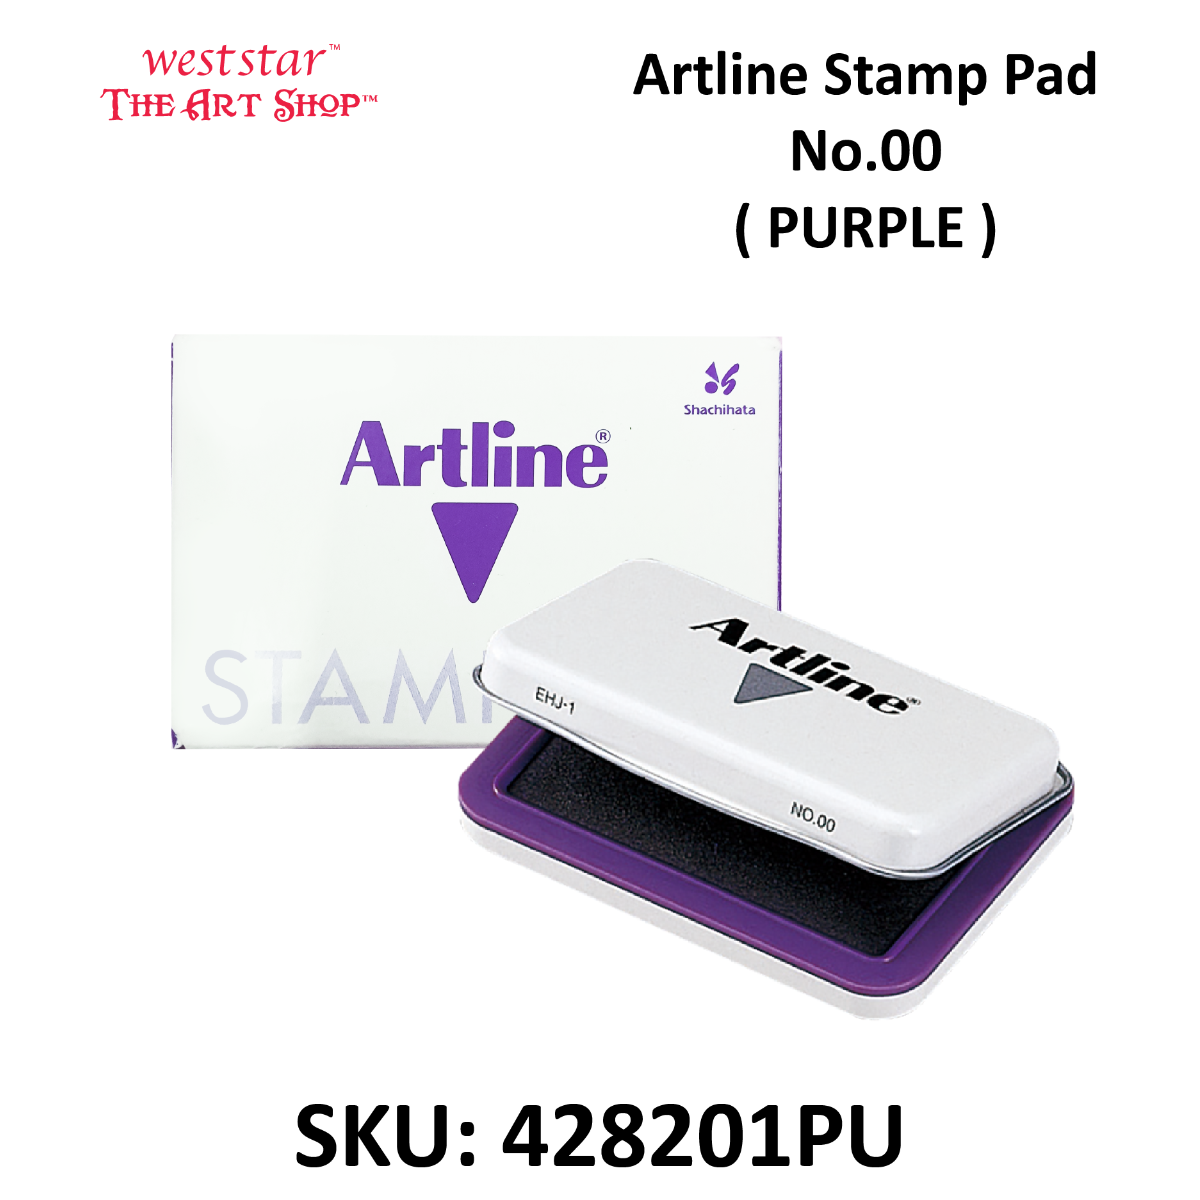 Artline Stamp Pad No.00 ( Small ) | grp